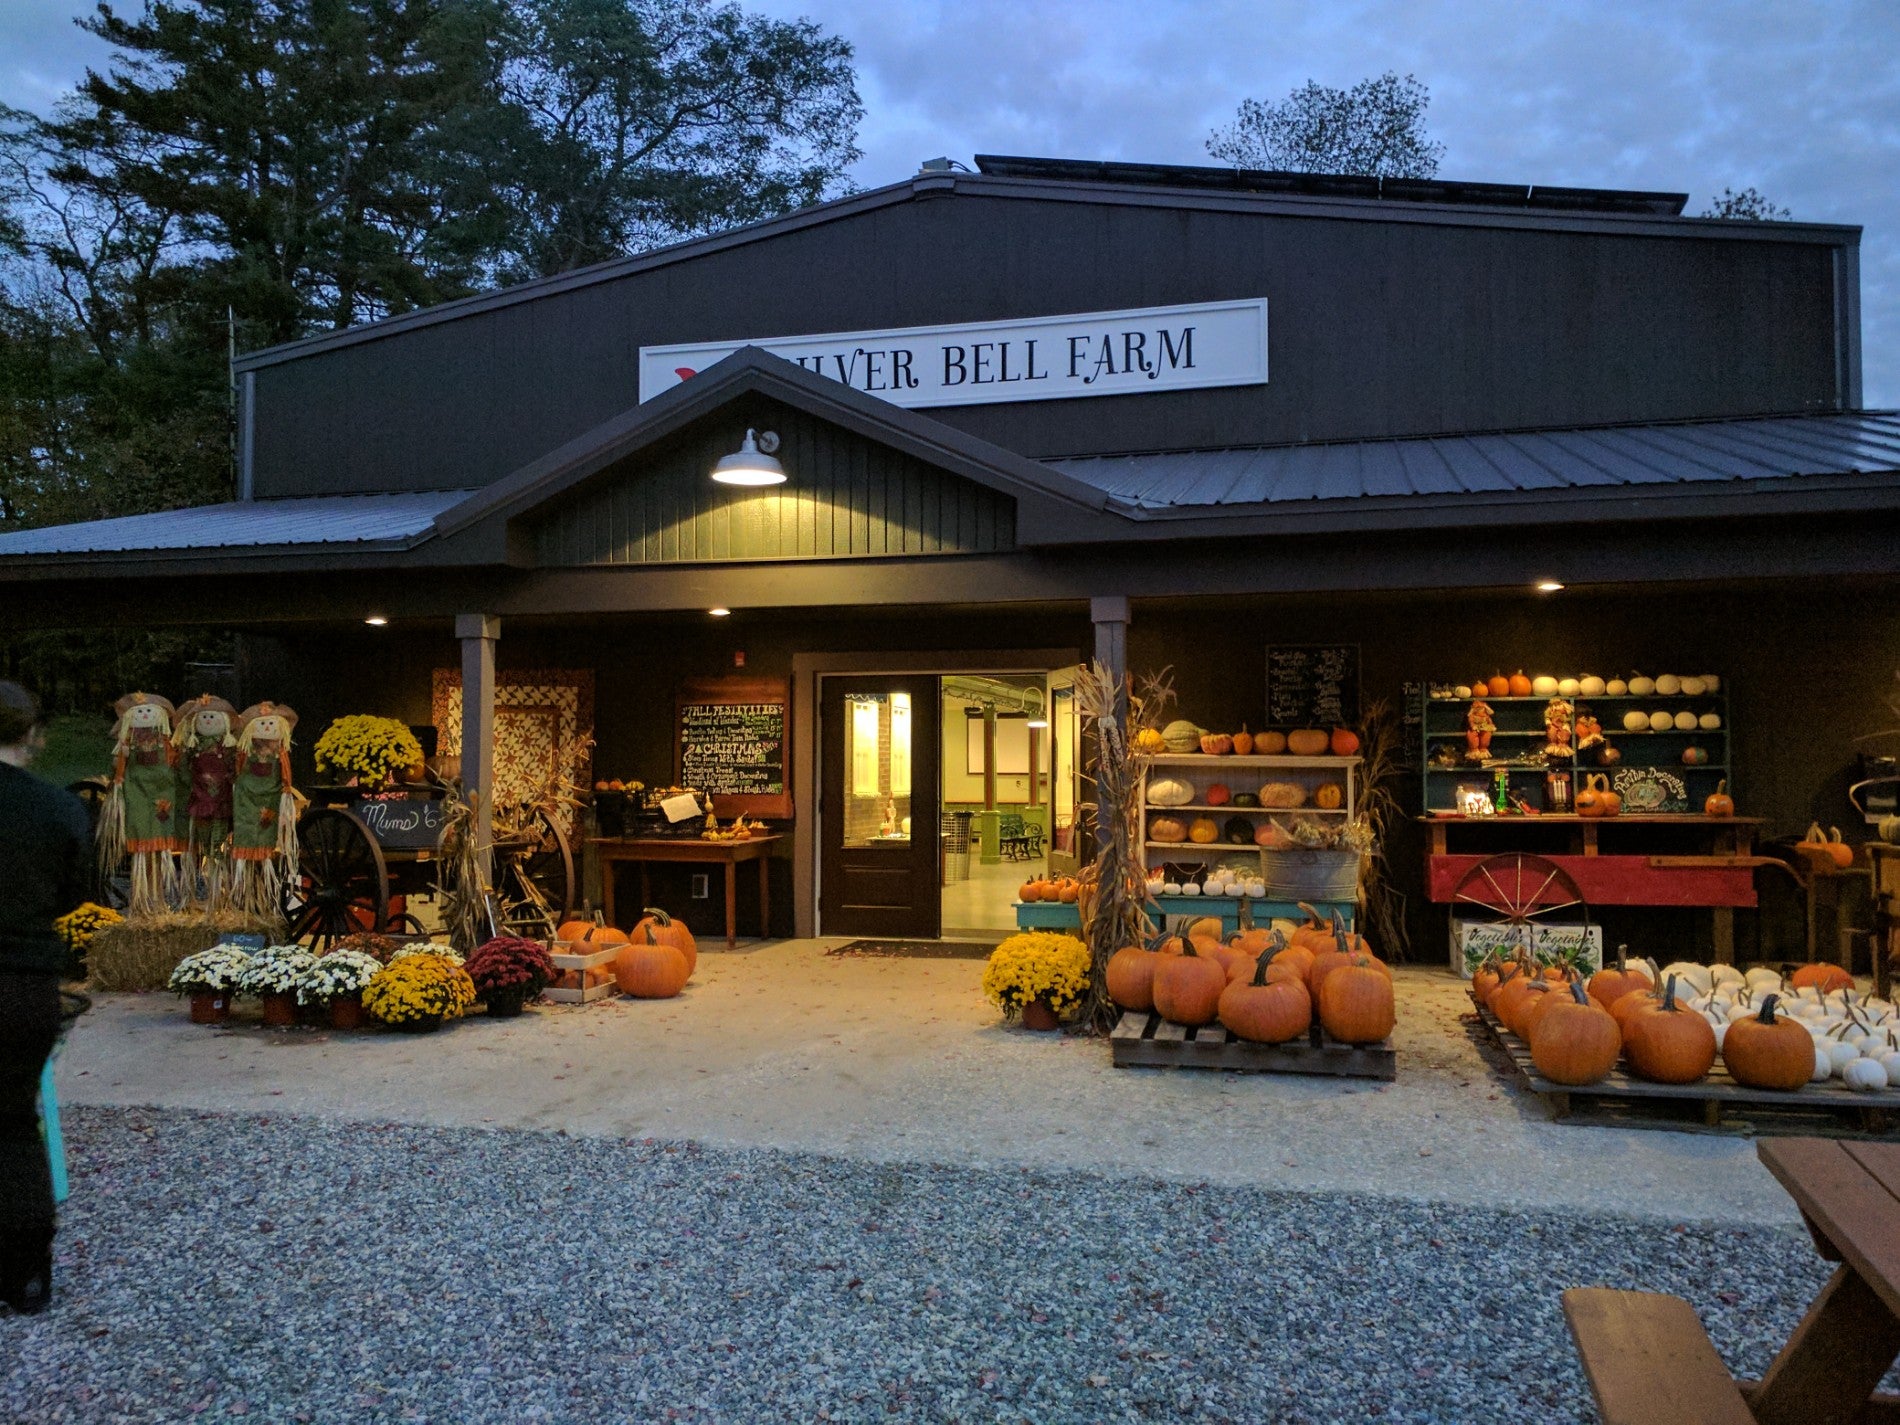 Silver Bell Farm (@silverbellfarm) • Instagram photos and videos